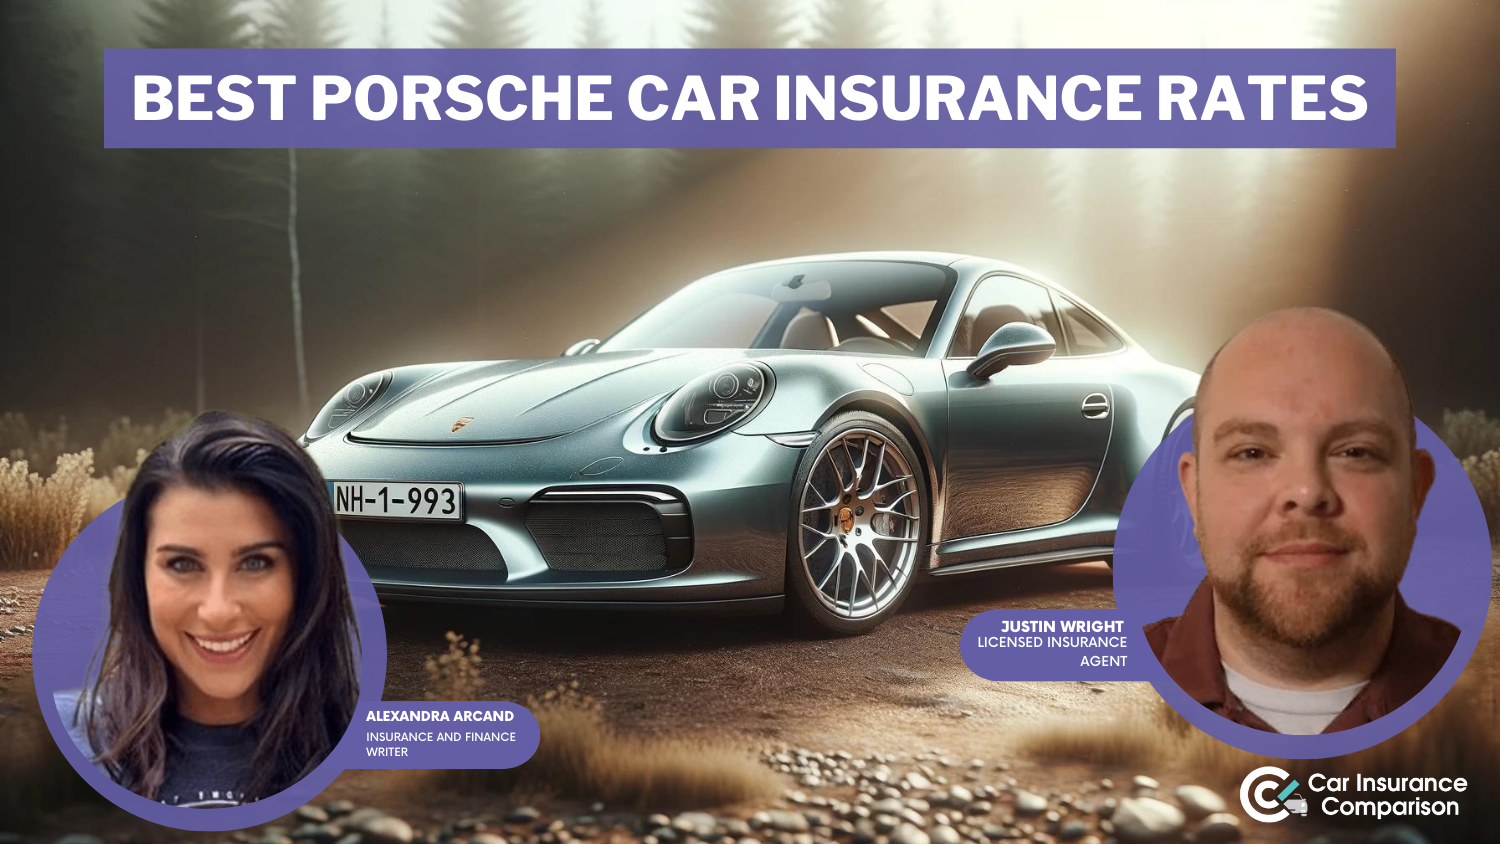 Best Porsche Car Insurance Rates - Allstate, State Farm, Liberty Mutual